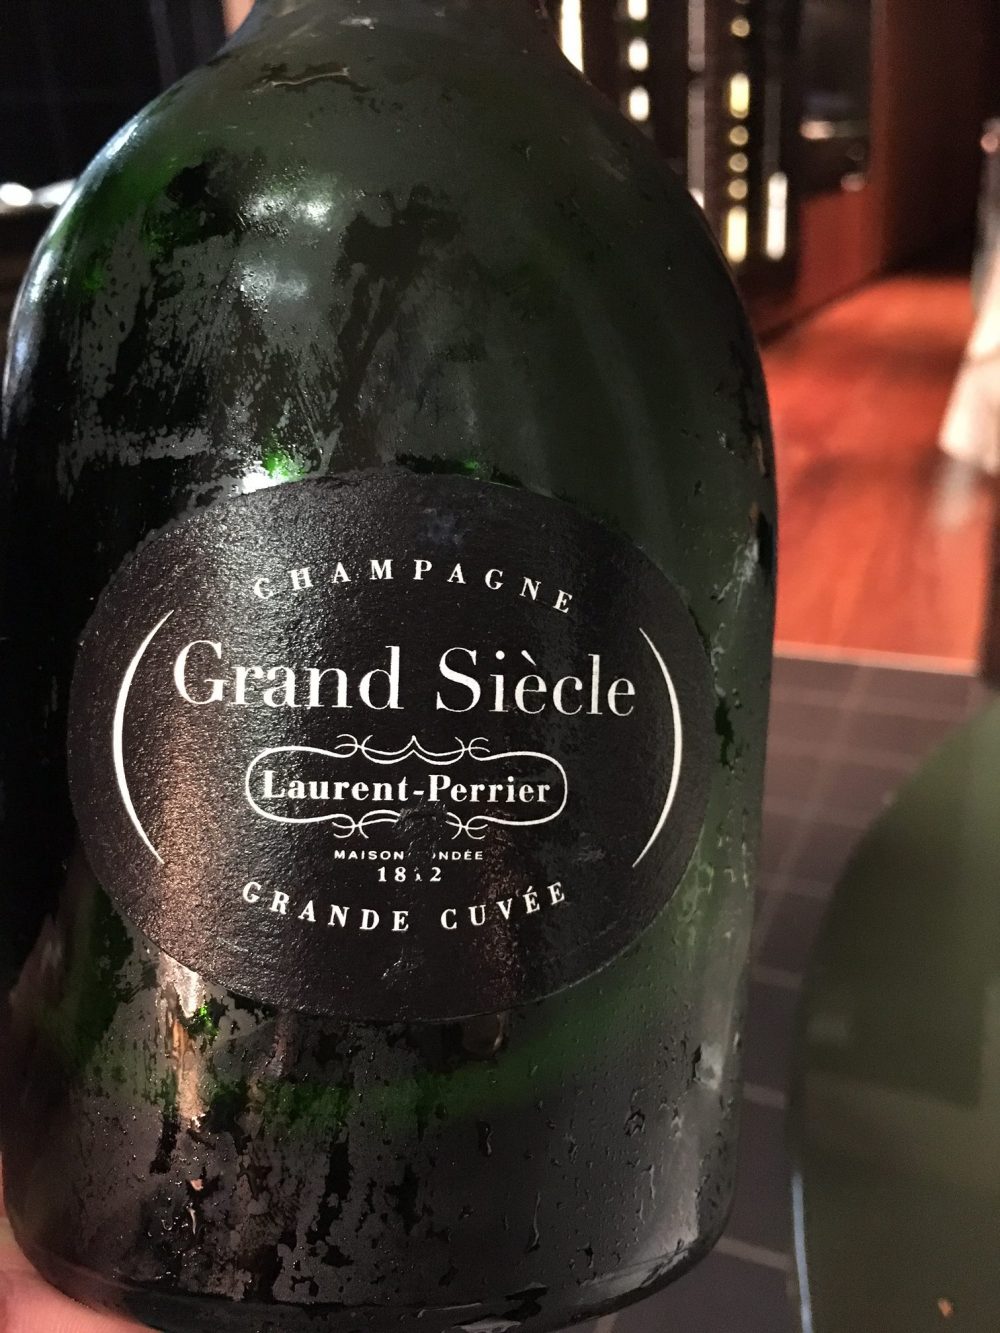 Seta - Champagne Grand Siécle Laurent-Perrier